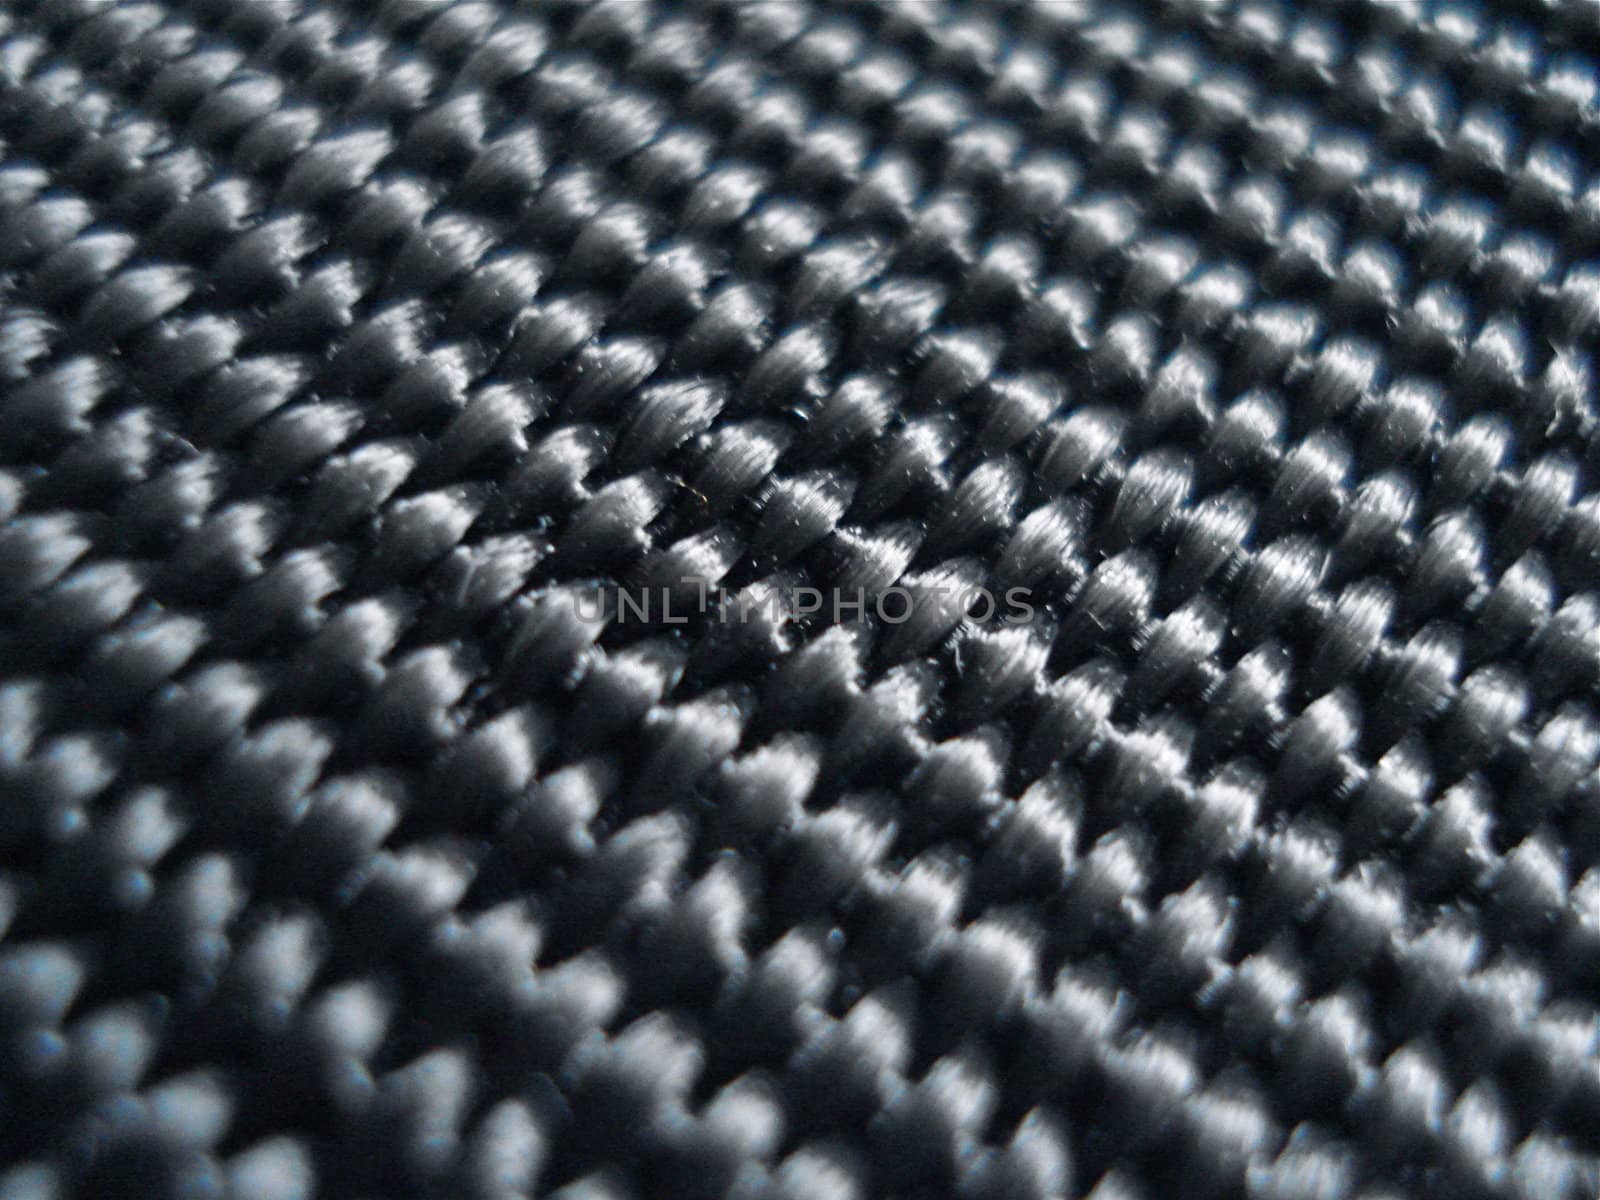 Black fabric reveals an intricate pattern of ridges up close.